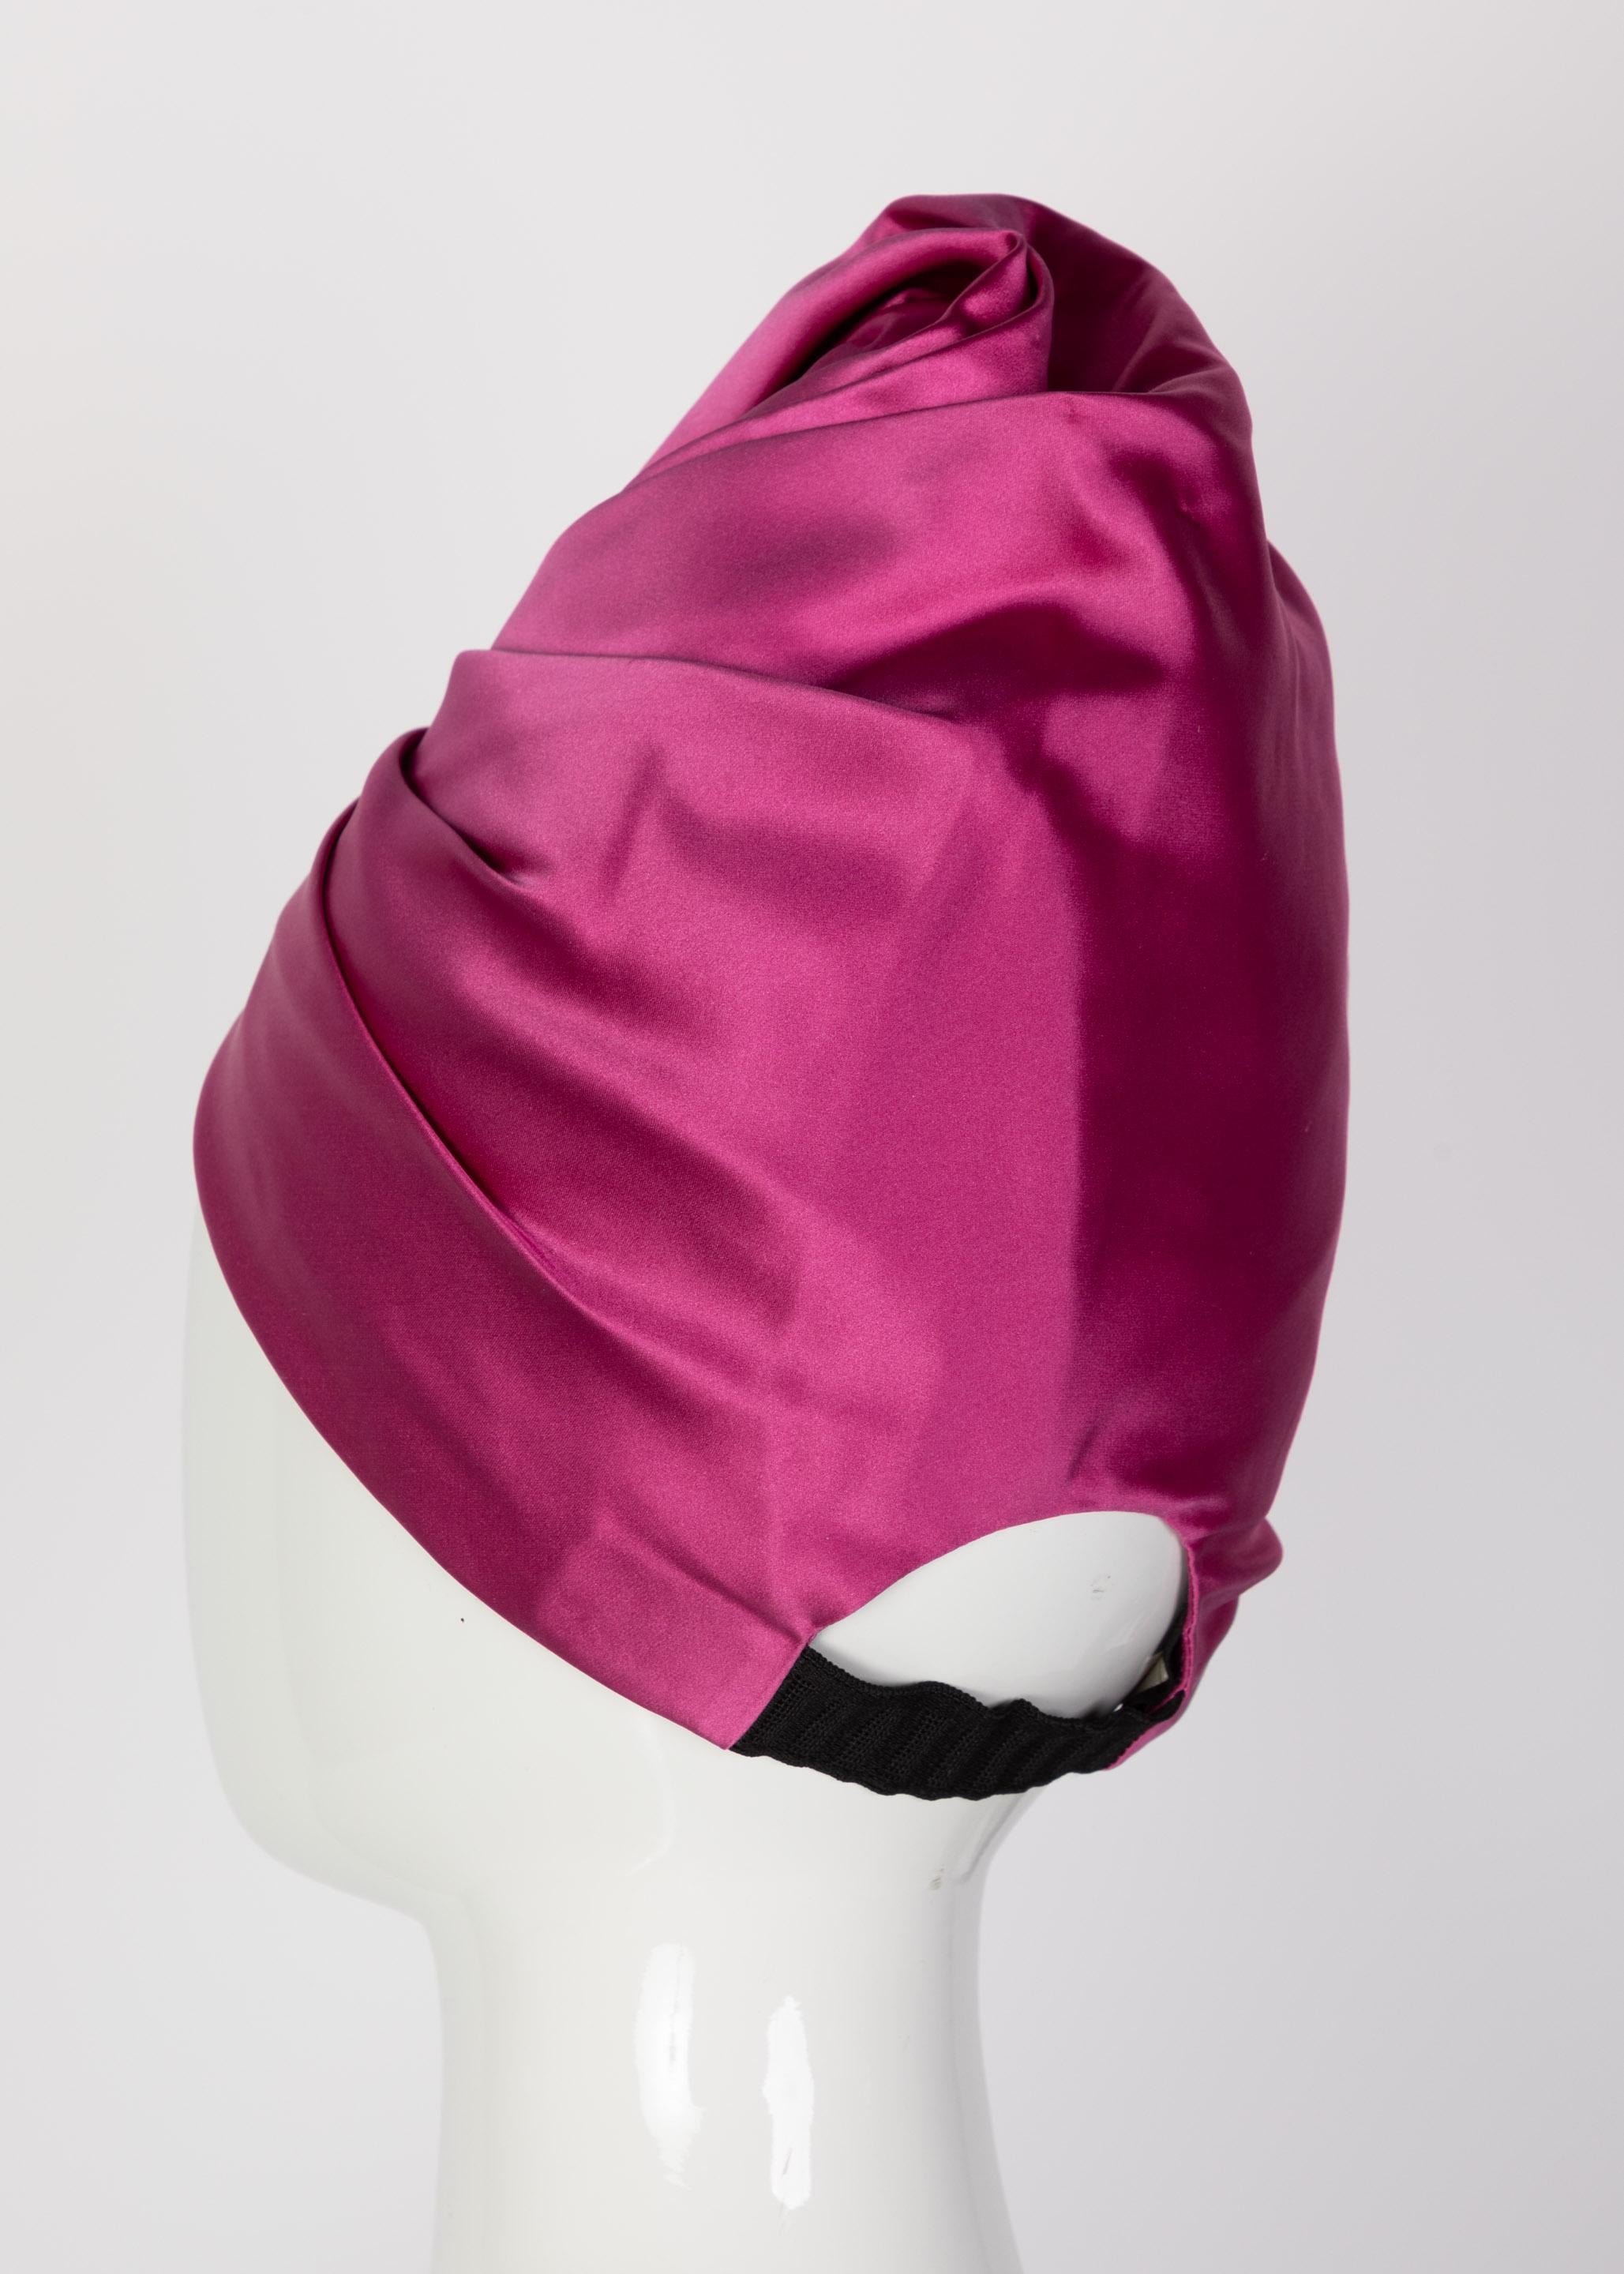 Prada Pink Silk Satin Turban Hat Runway, 2007 For Sale 1